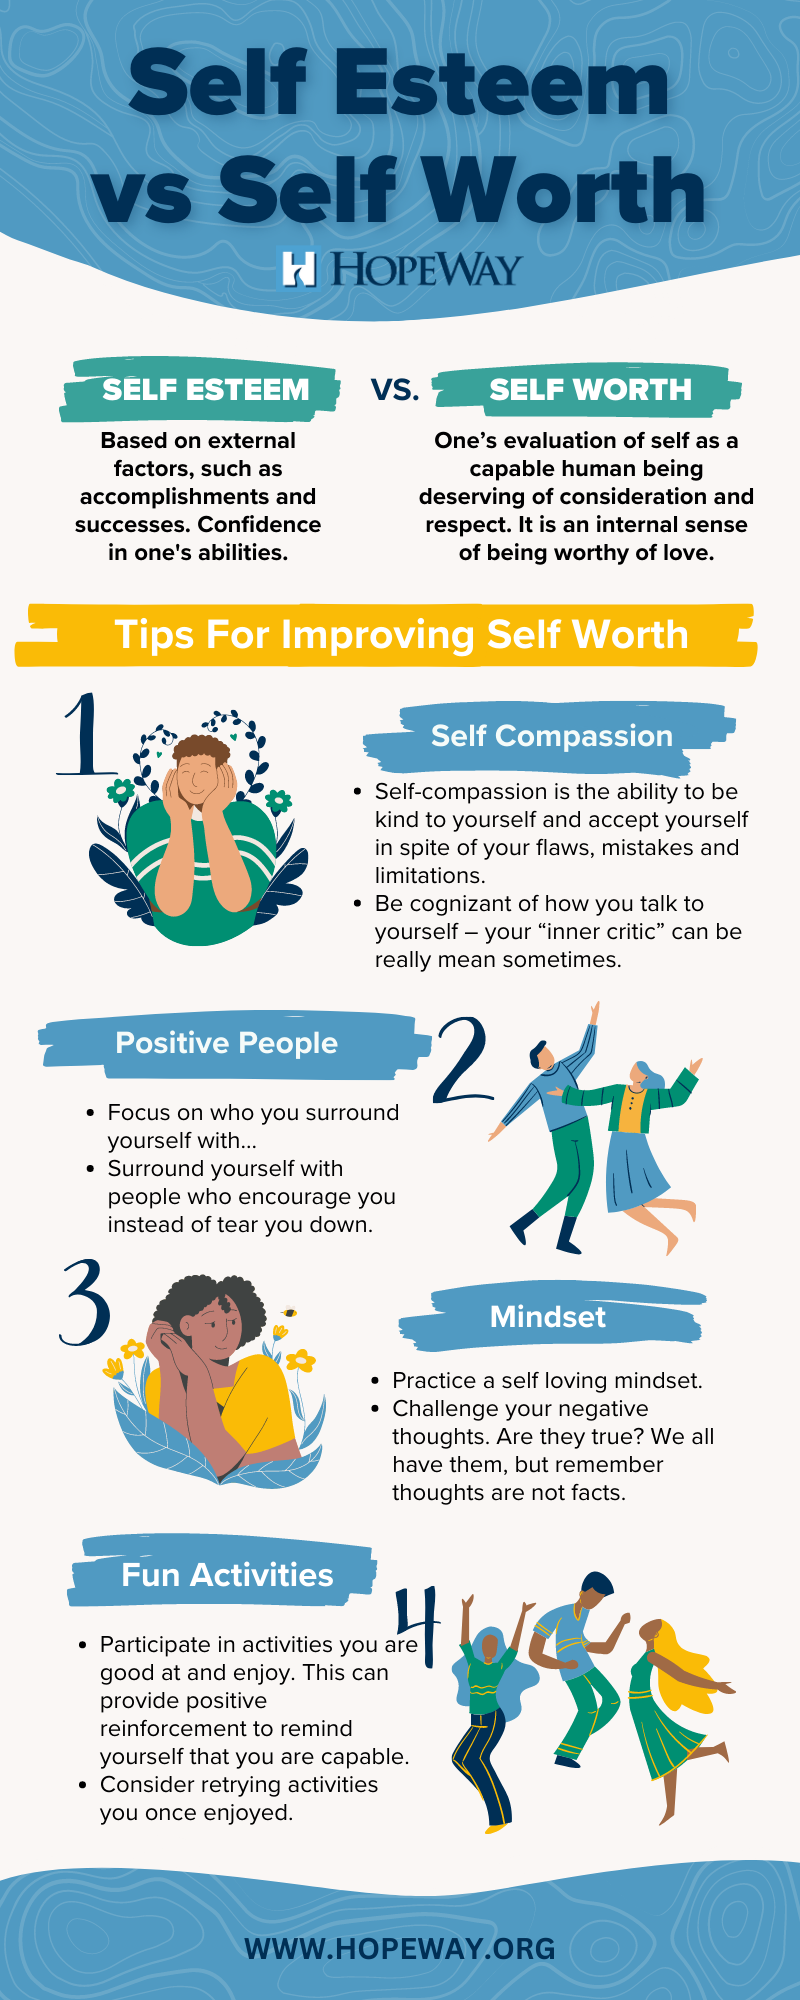 self esteem vs self worth image, what is self esteem, what is self worth, tips for improving self worth